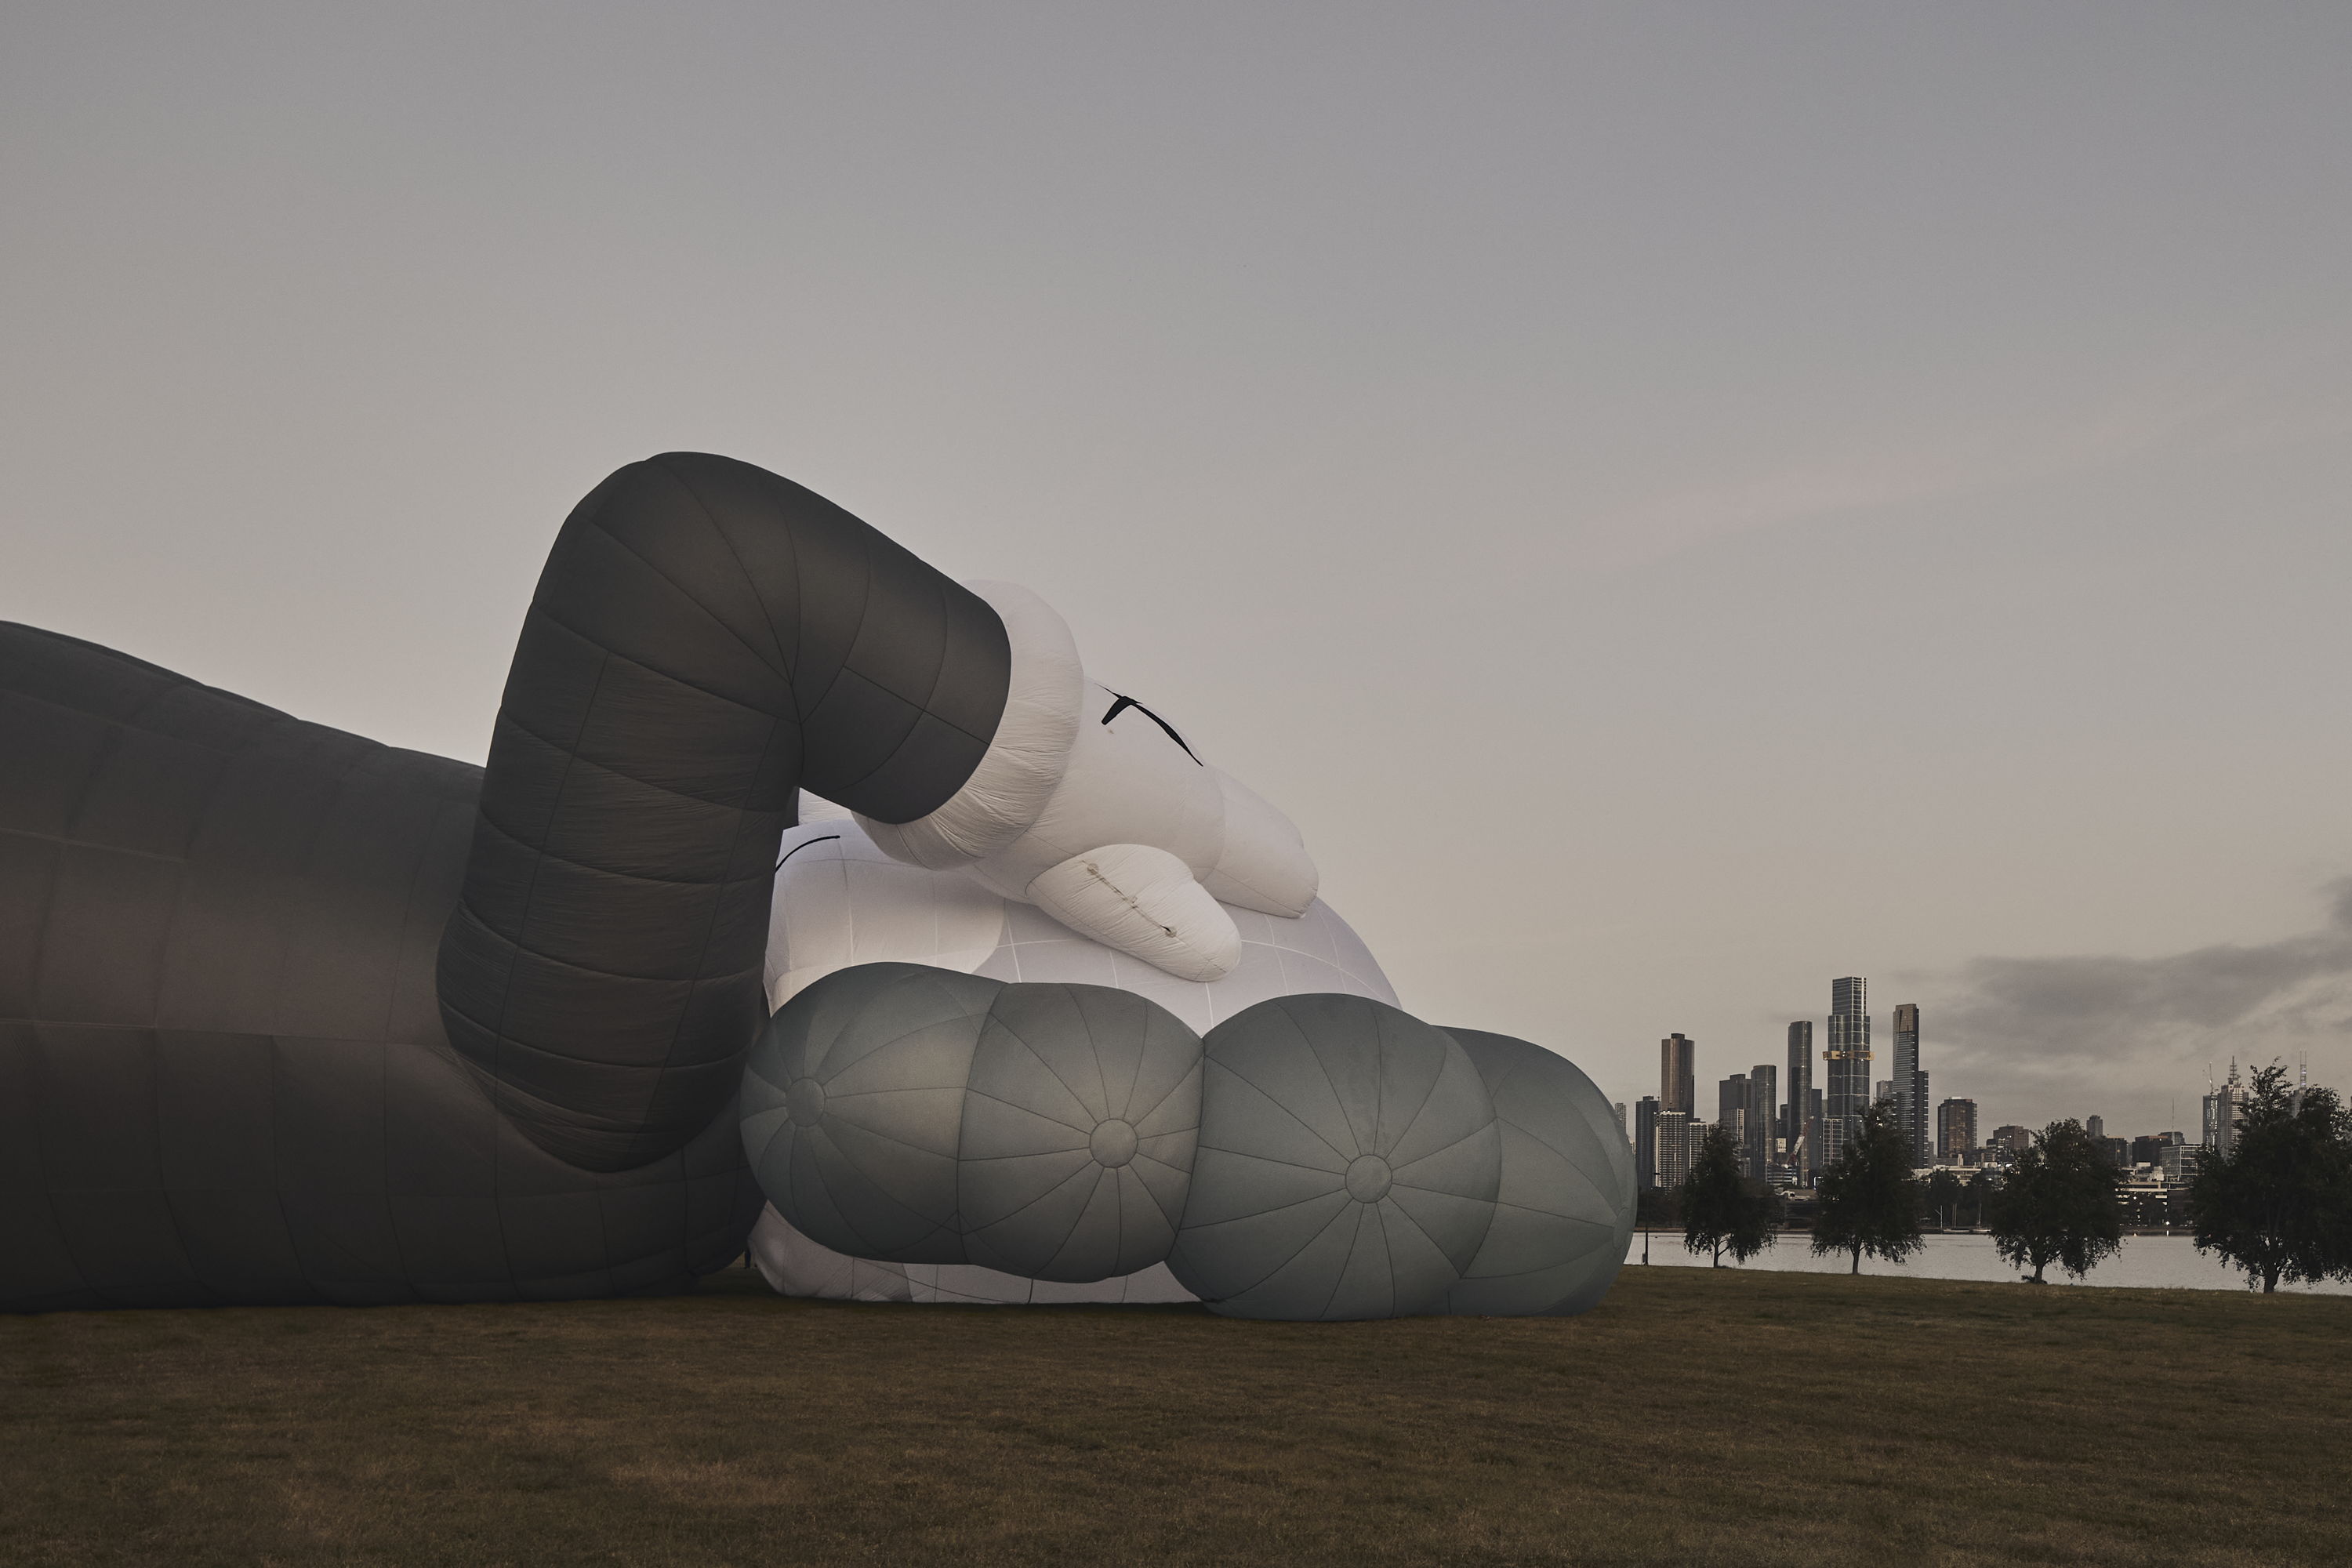 KAWS Hot Air Balloon Takes Flight Over Melbourne Skyline